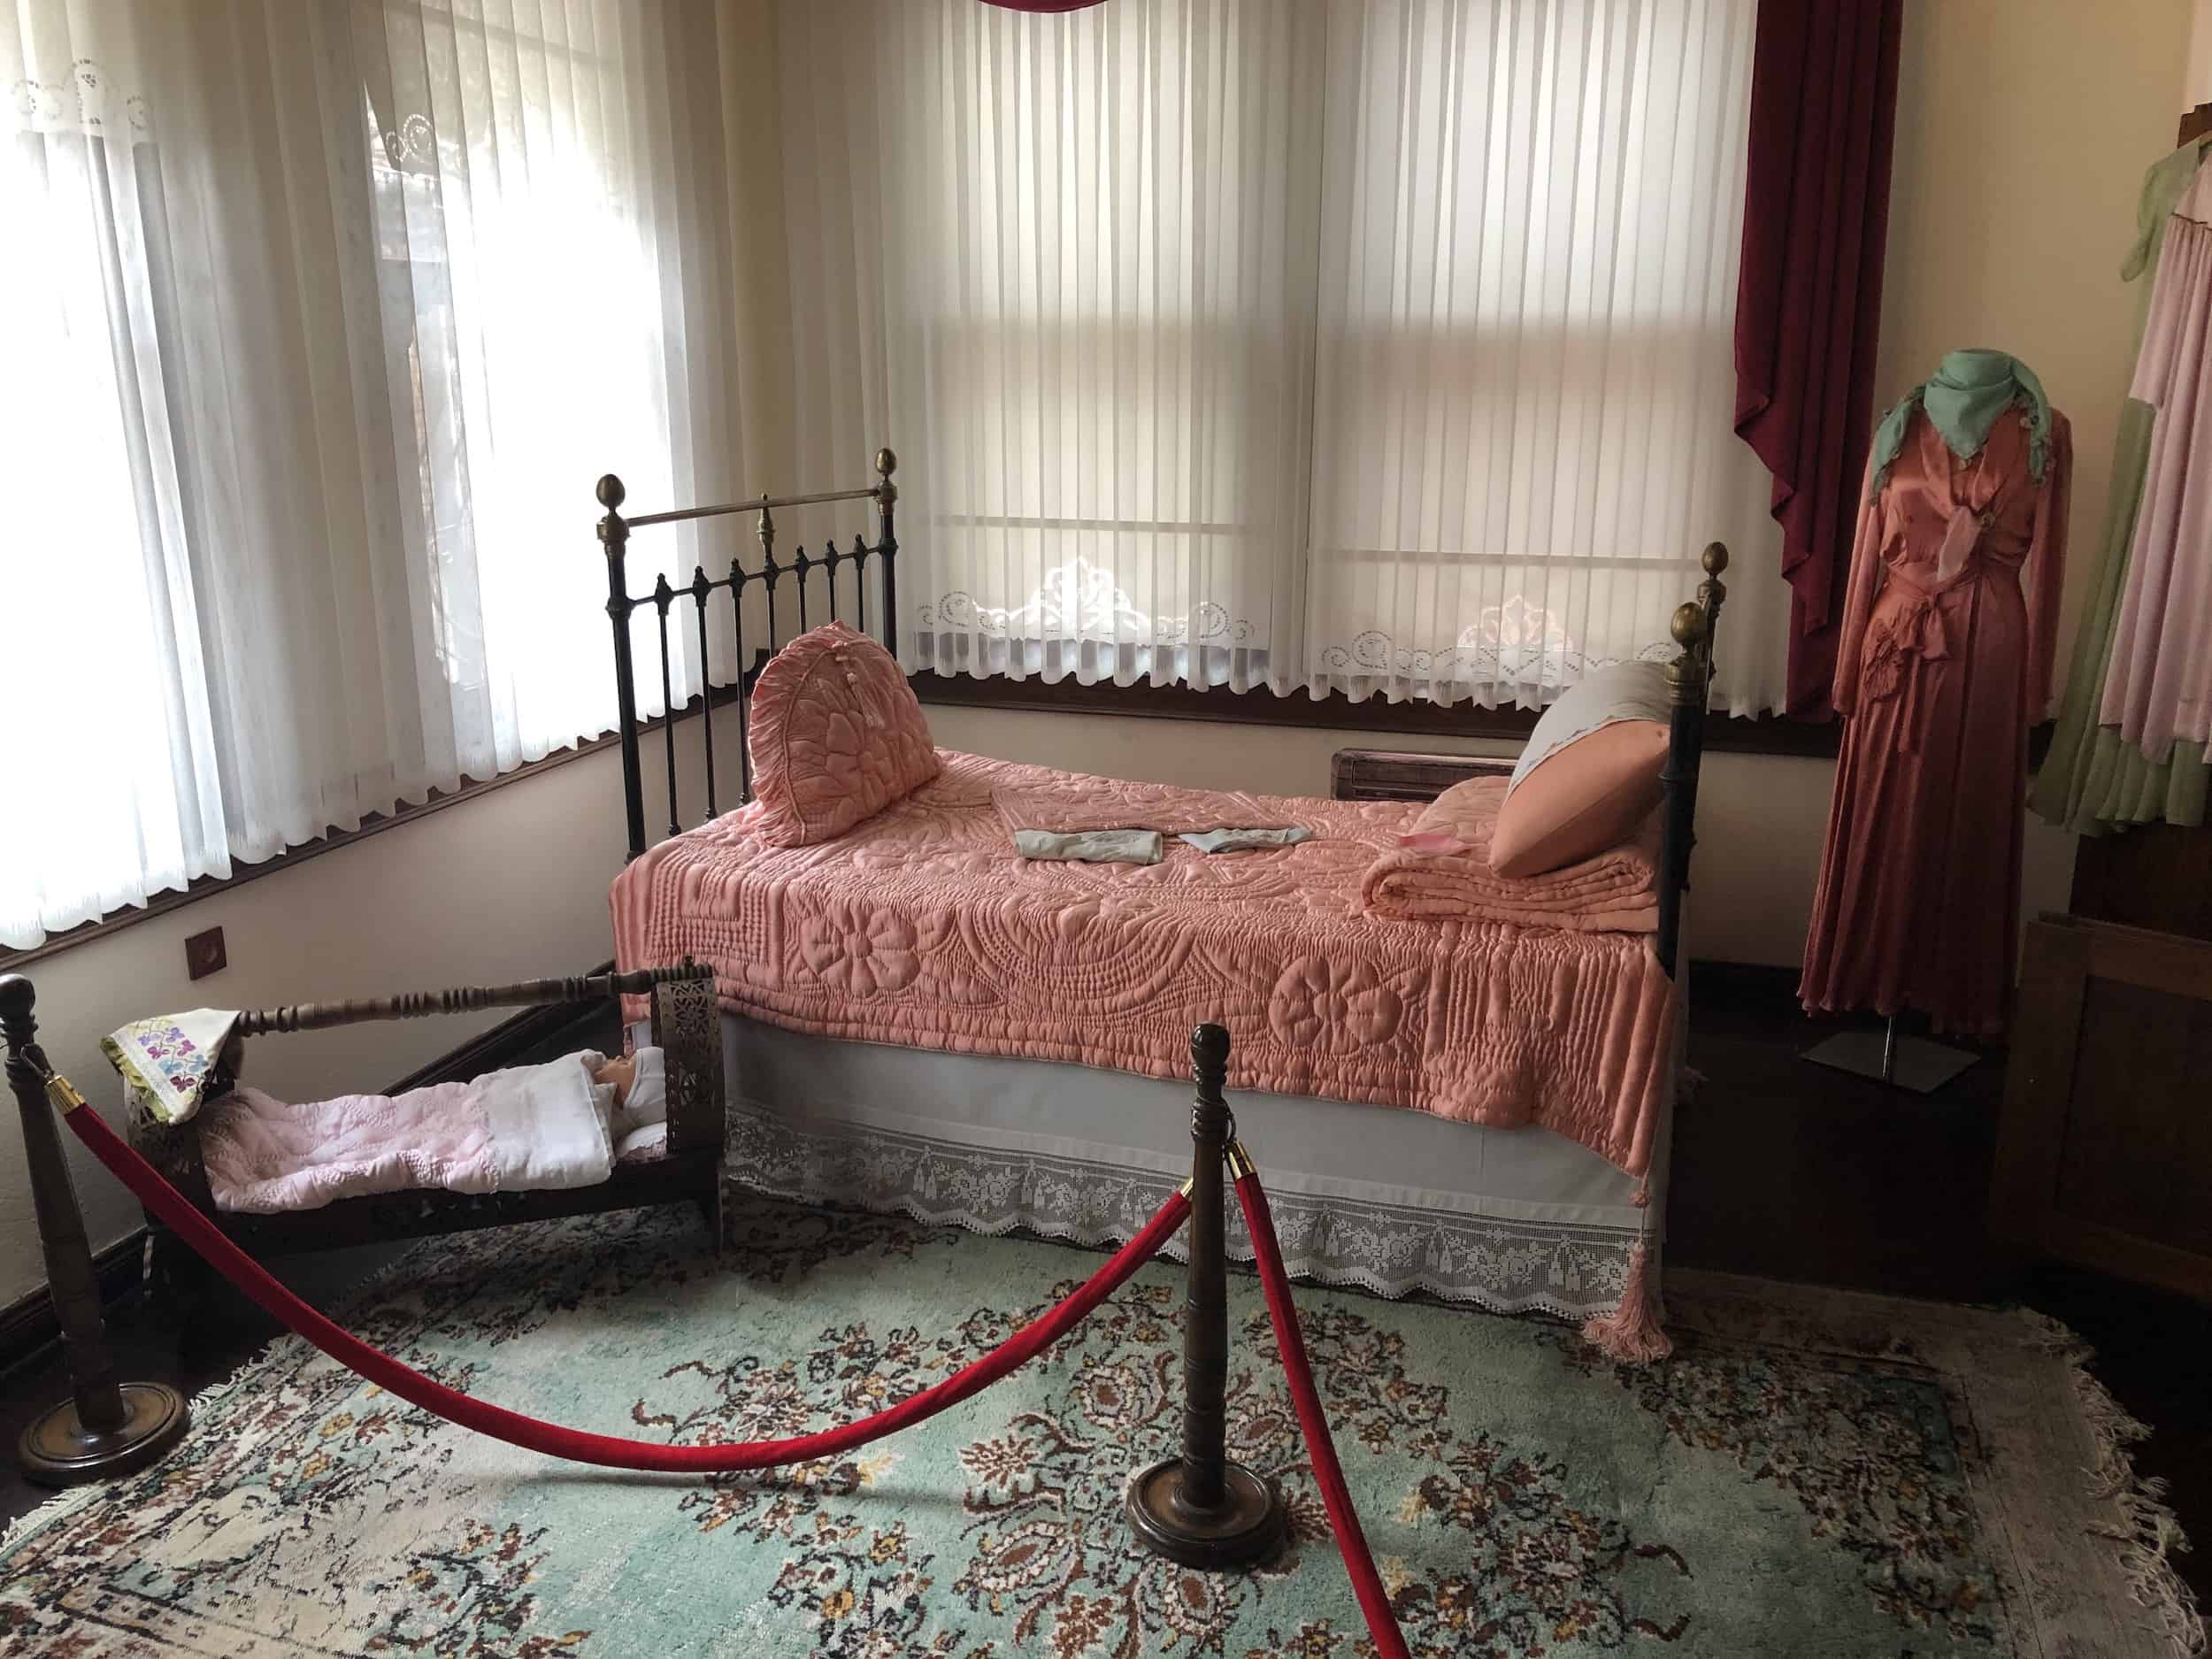 Bedroom at the Bursa Life Culture Museum in Bursa, Turkey